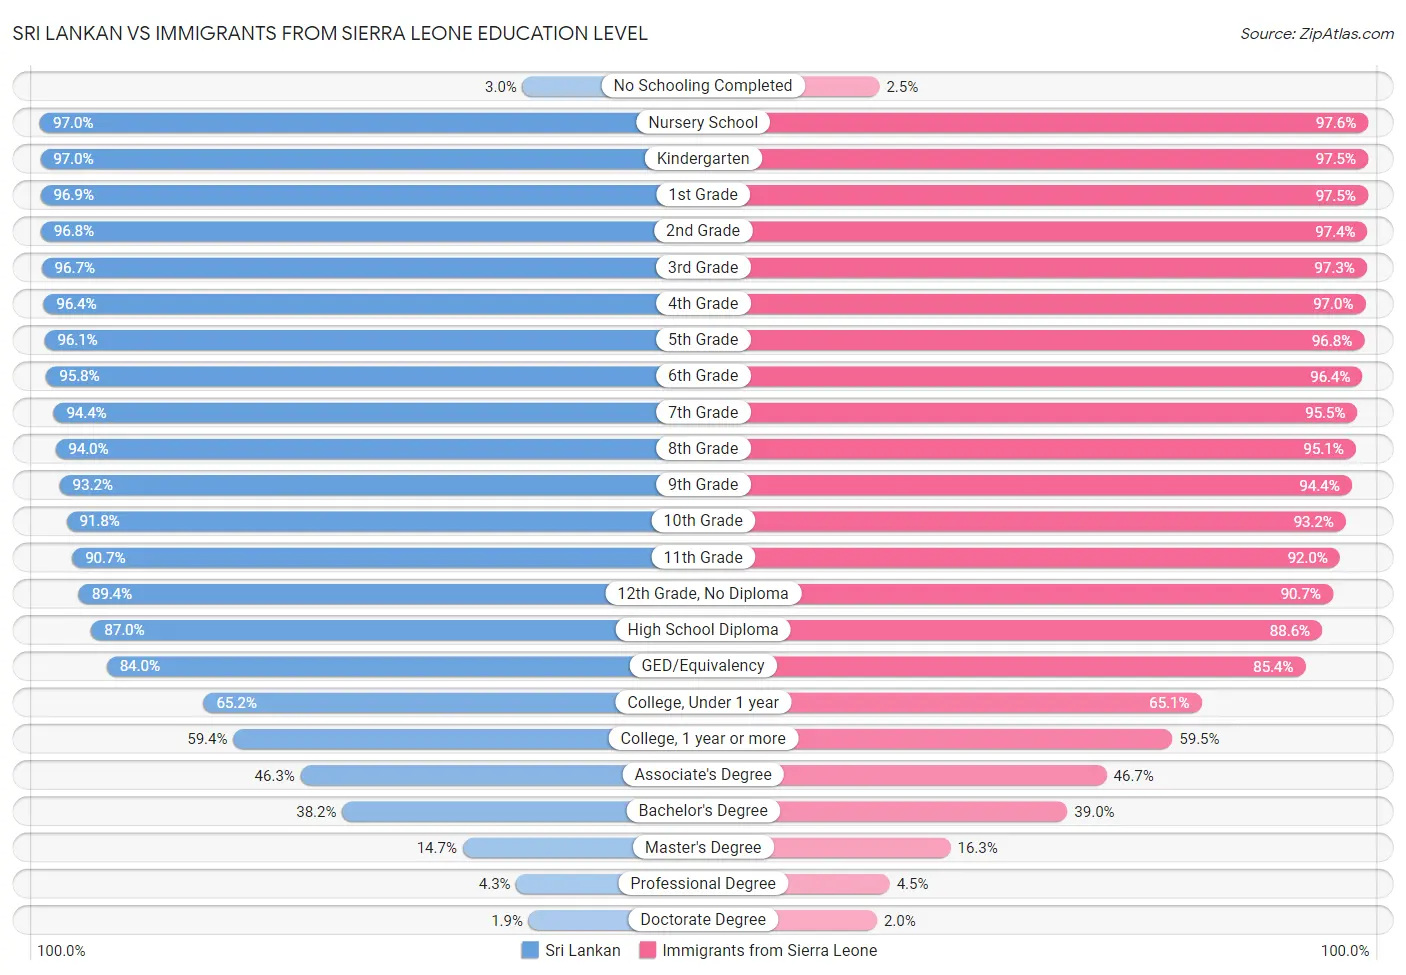 Sri Lankan vs Immigrants from Sierra Leone Education Level